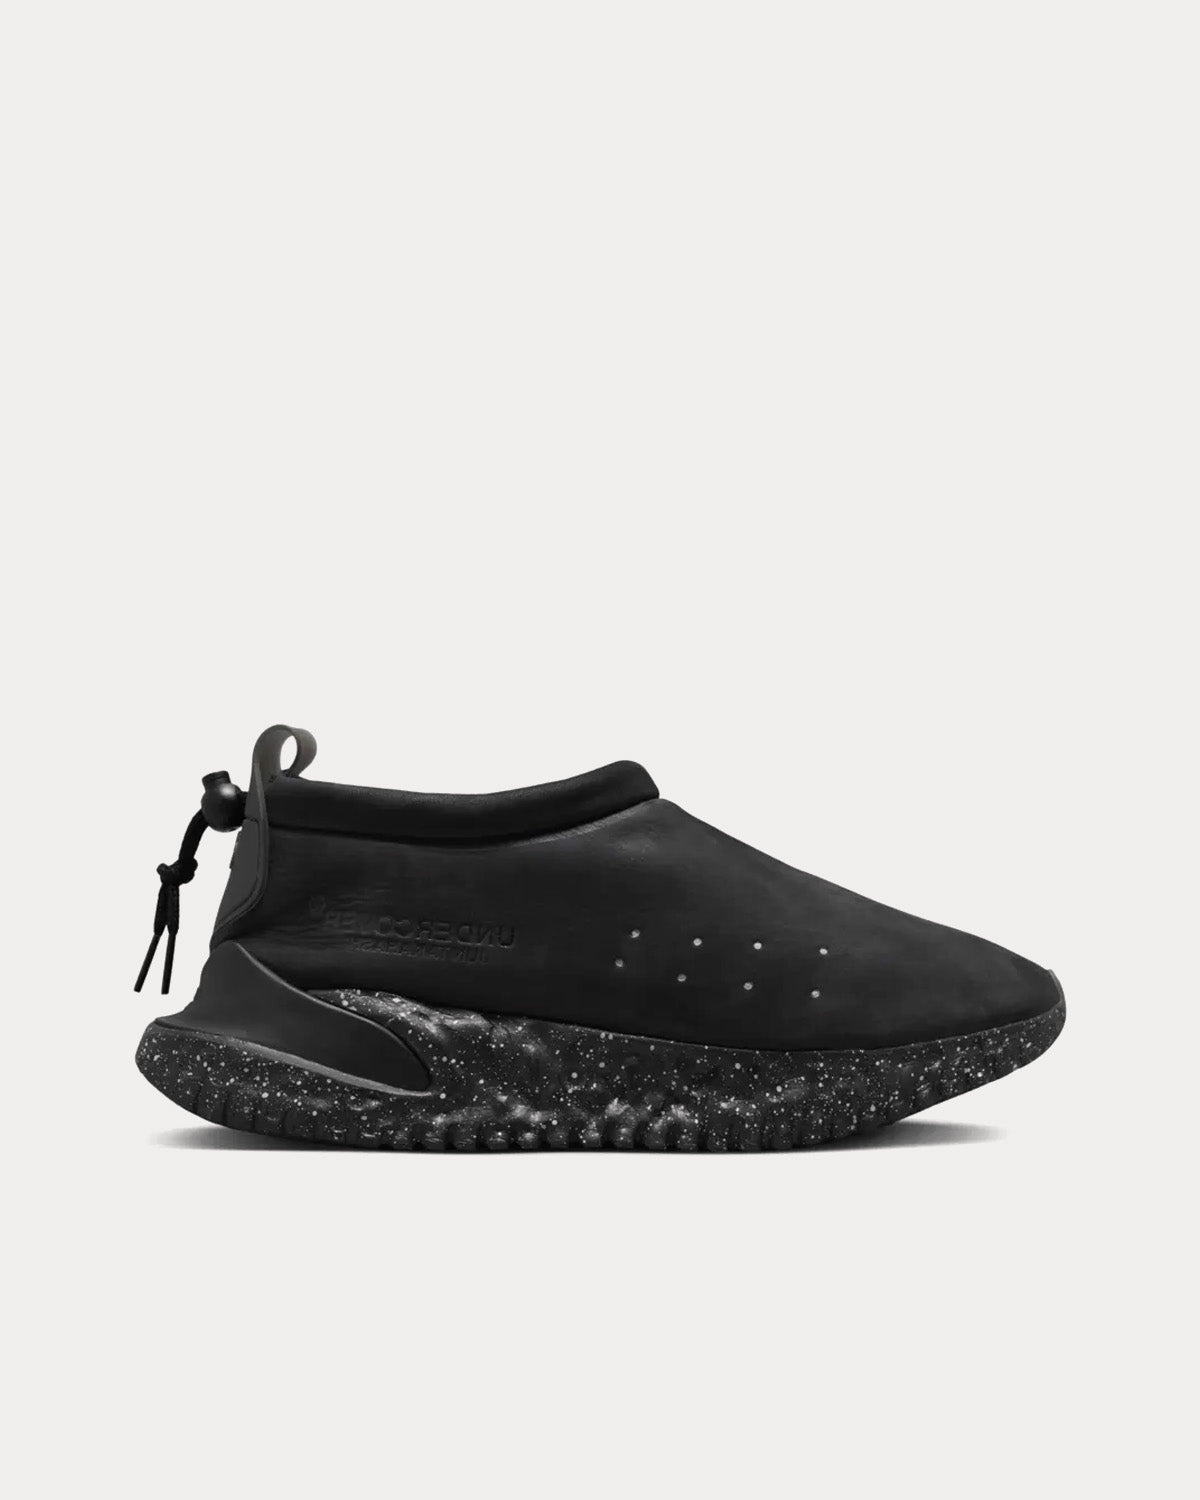 Nike x Undercover - Moc Flow Black Slip On Sneakers